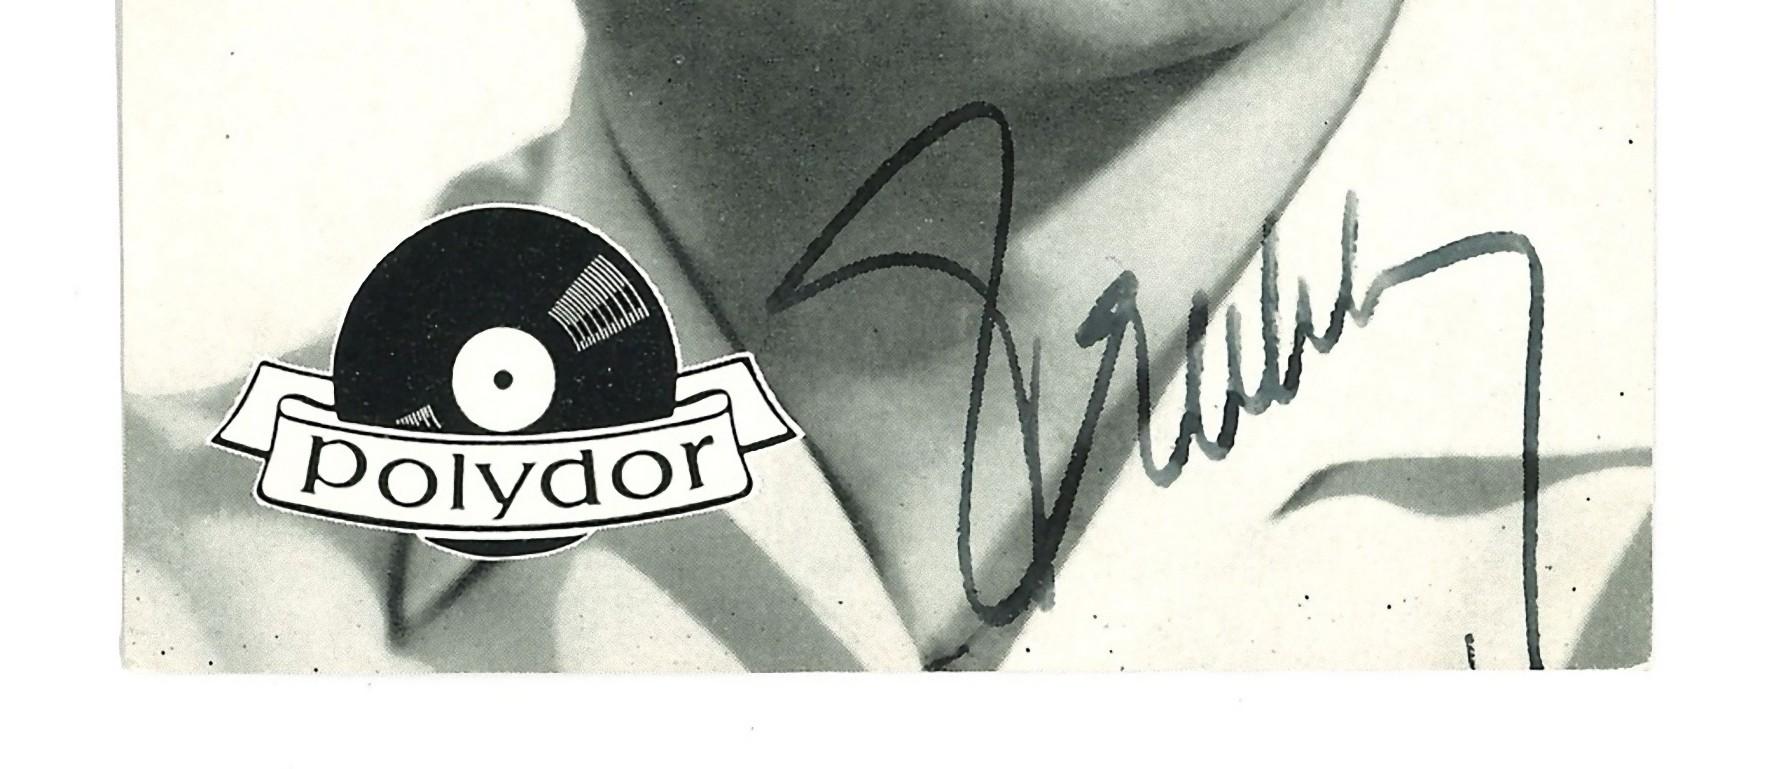 Autographed Portrait of Freddy Quinn - Vintage  b/w Postcard - 1960s - Photograph by Unknown